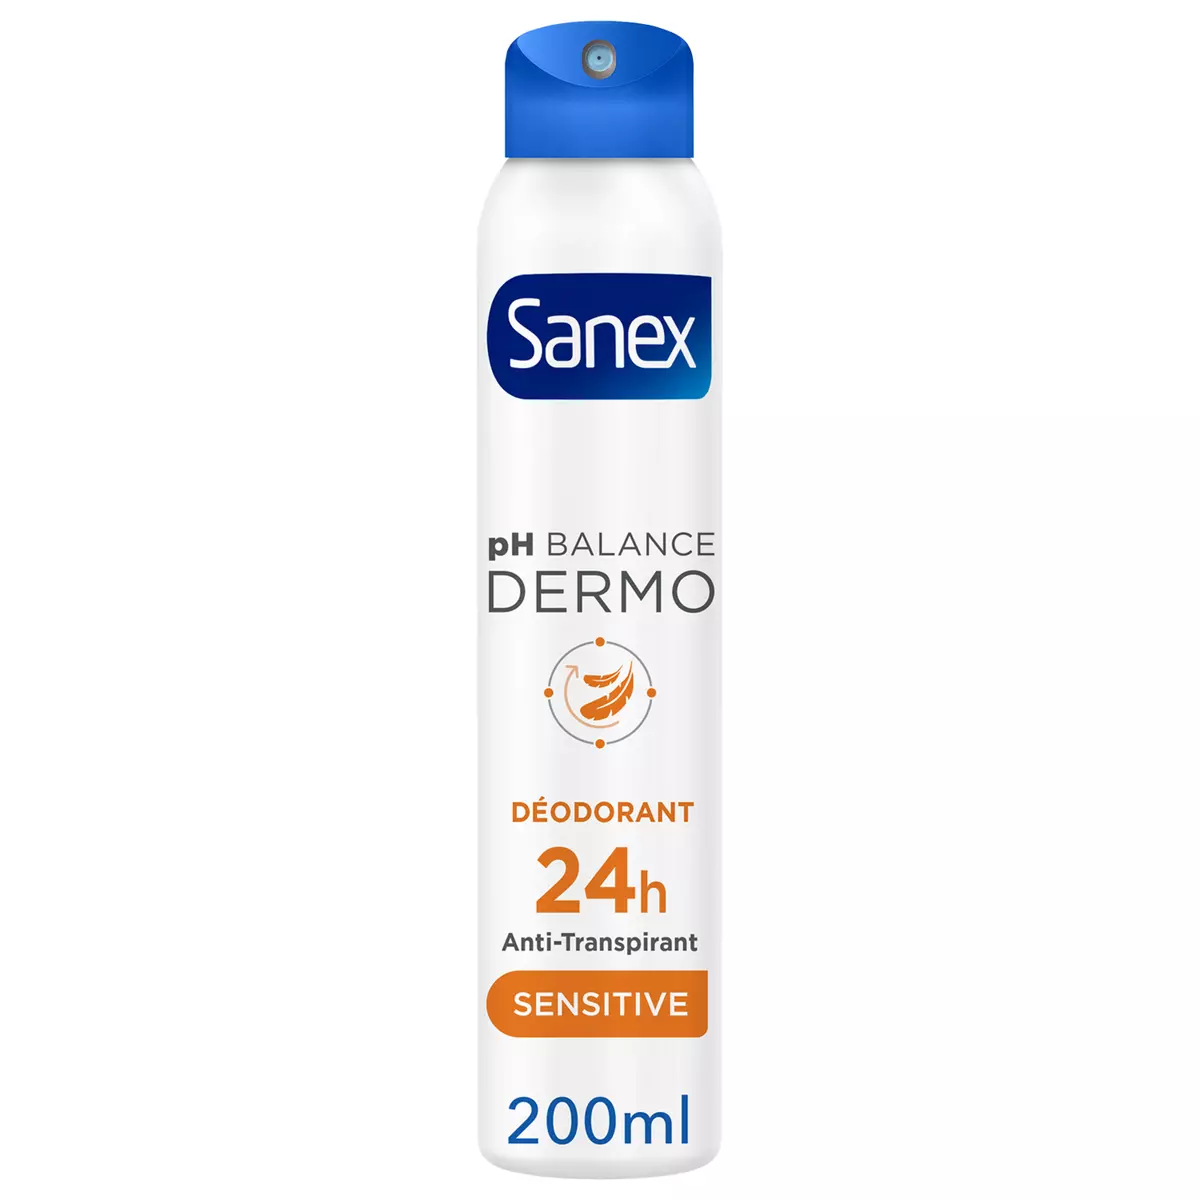 SANEX Déodorant spray 24h dermo sensitive anti-transpirant 200ml